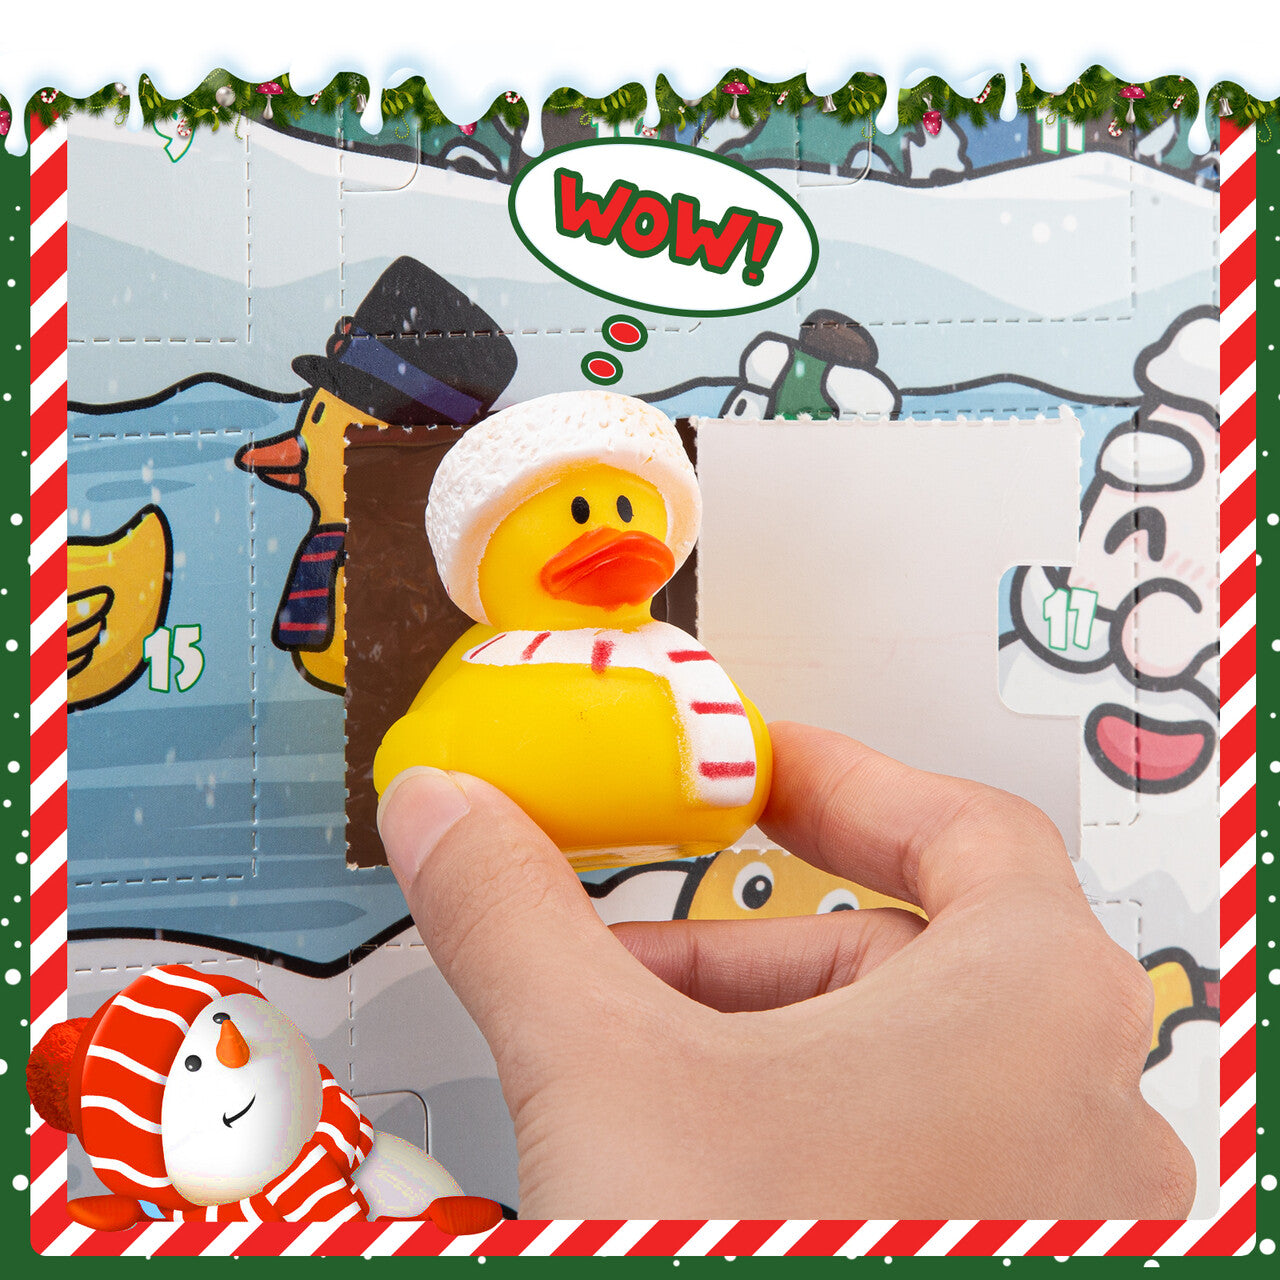 【Christmas sale】24 Days of Christmas Rubber Duck Set